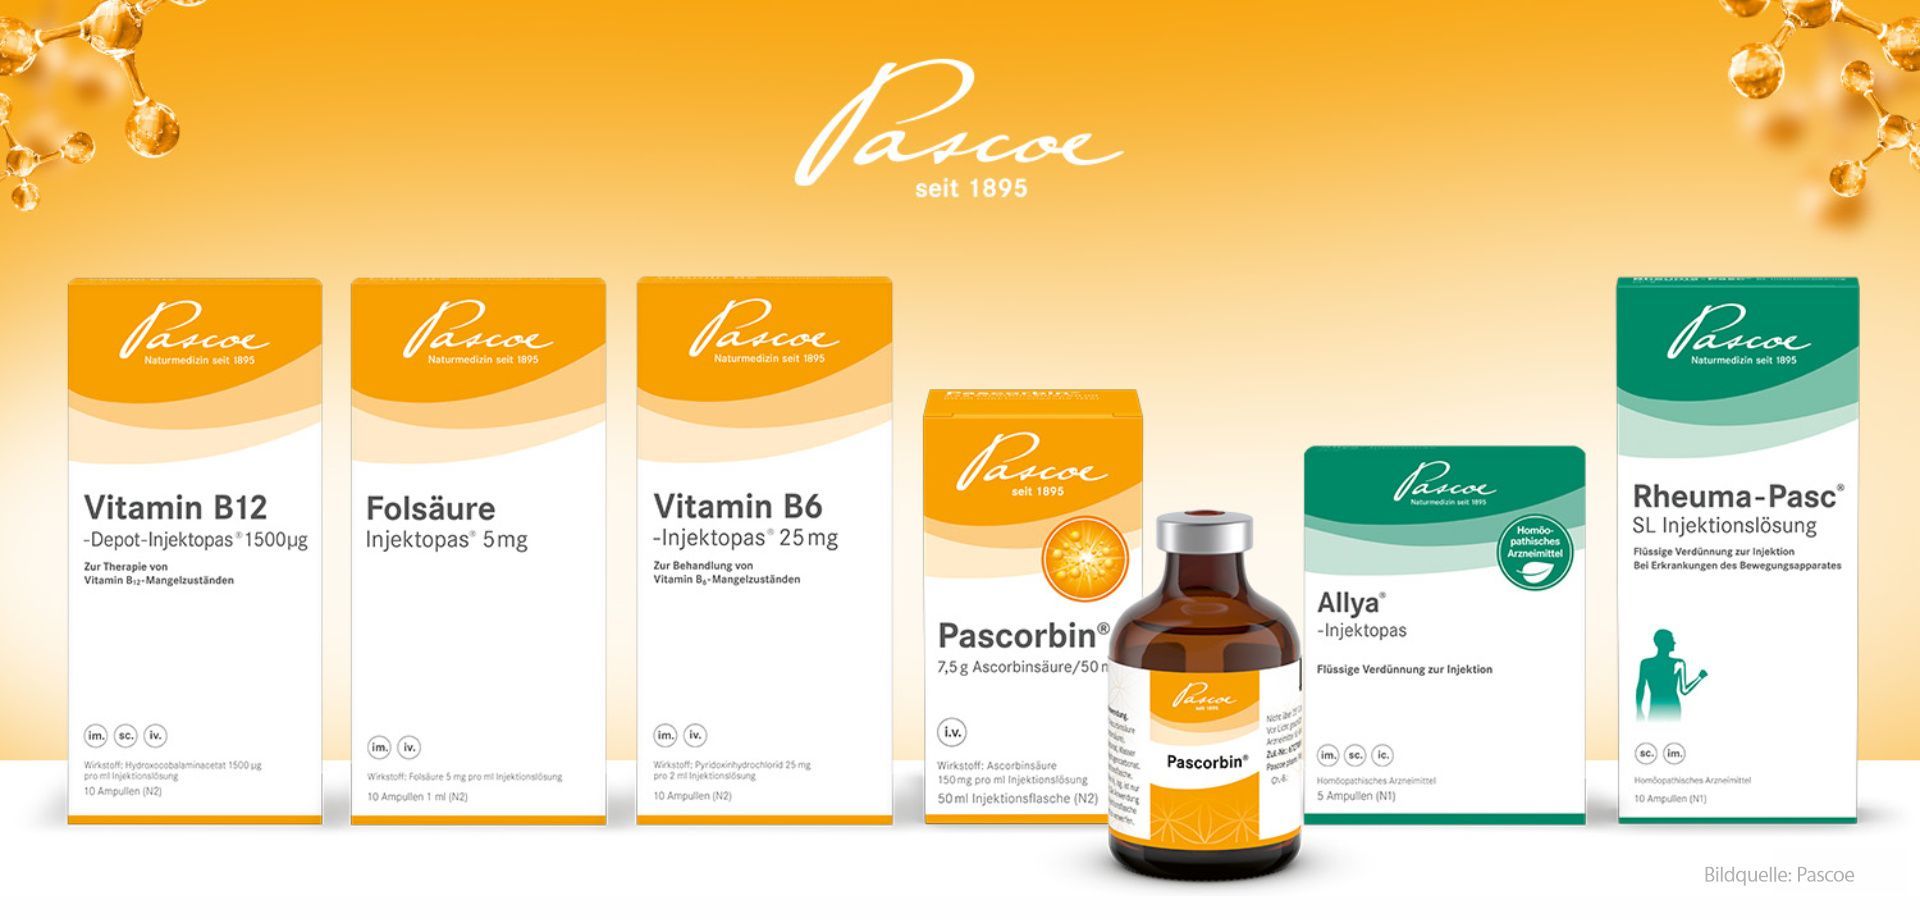 Pascoe Pascorbin Sortiment Vitamin  C B12 B6 B8 Folsäure Allya Rheuma Pasc Injektion